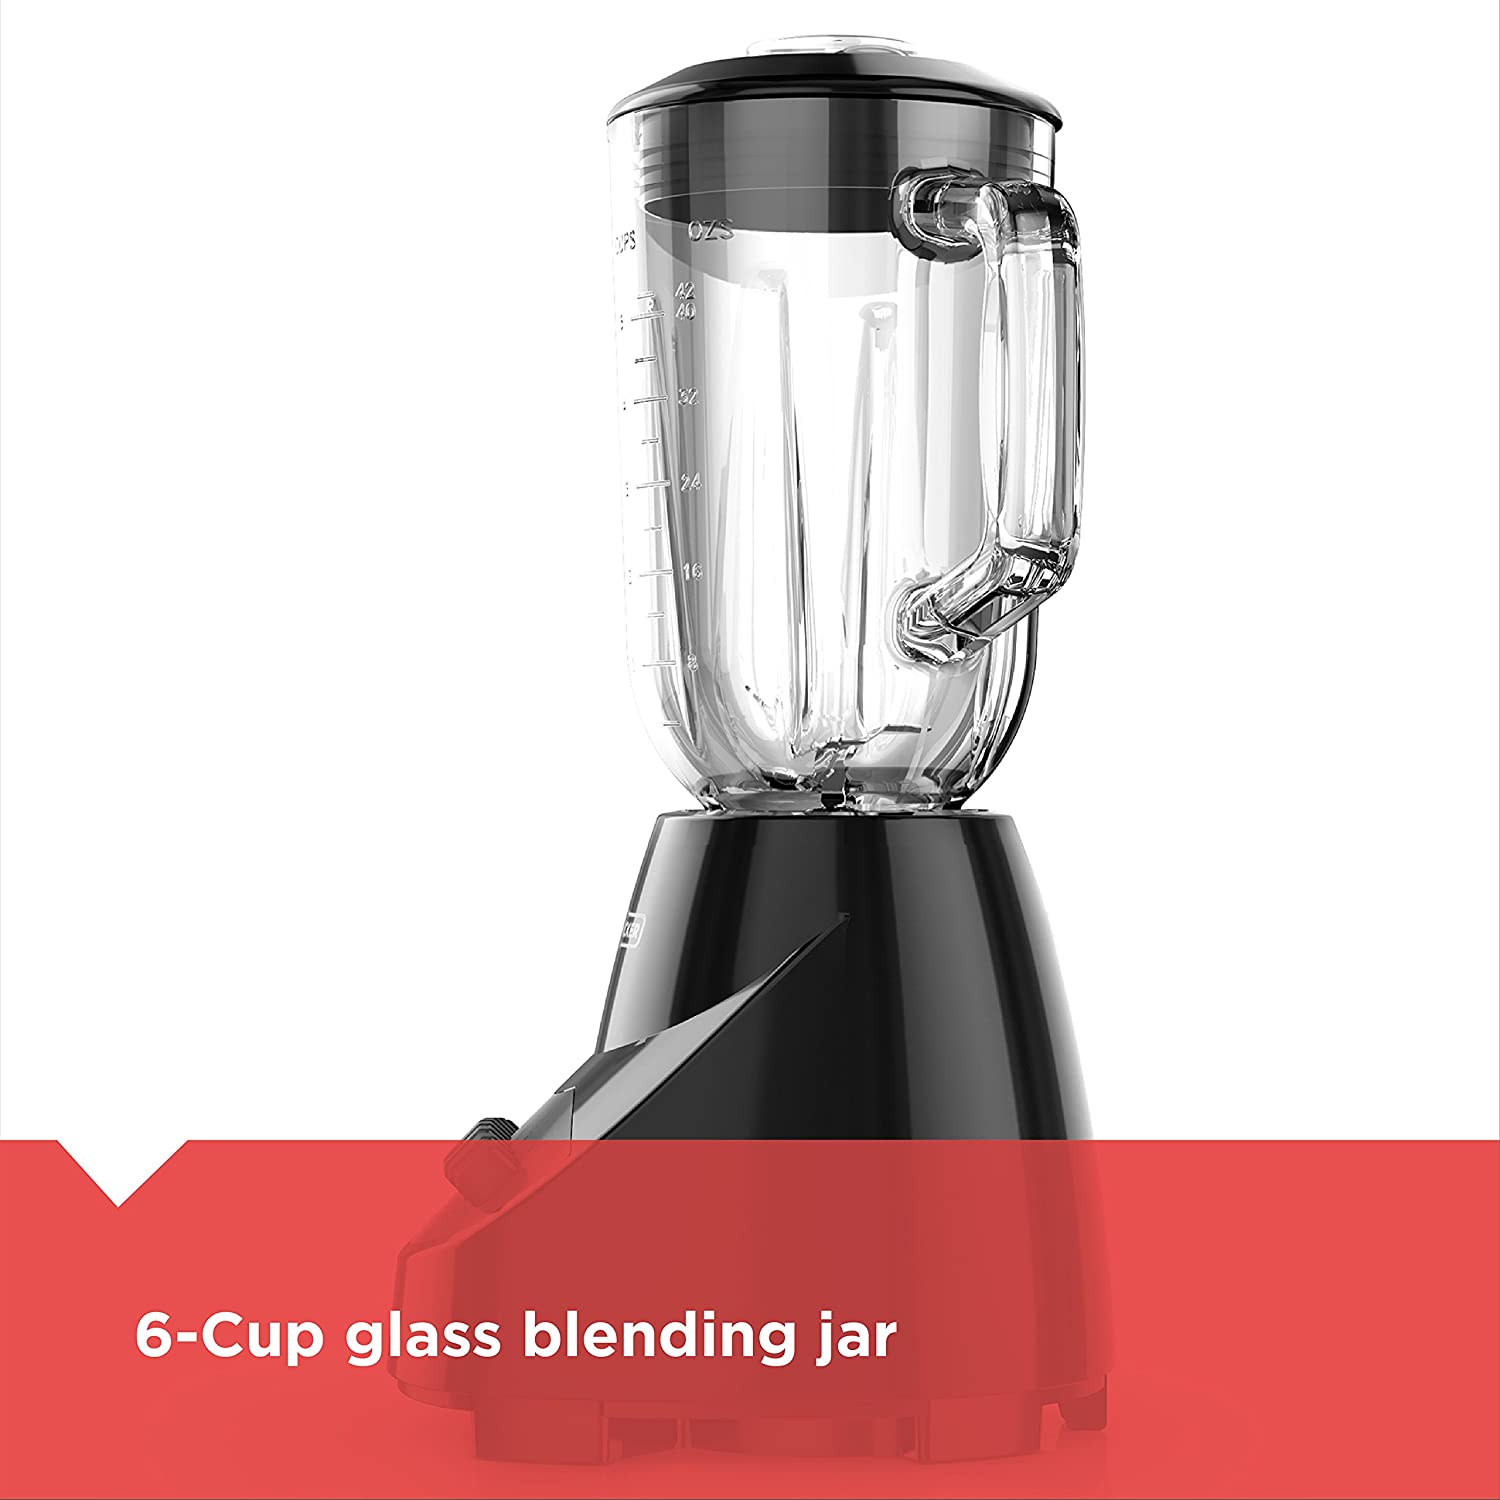  BLACK+DECKER FusionBlade Blender with 6-Cup Glass Jar